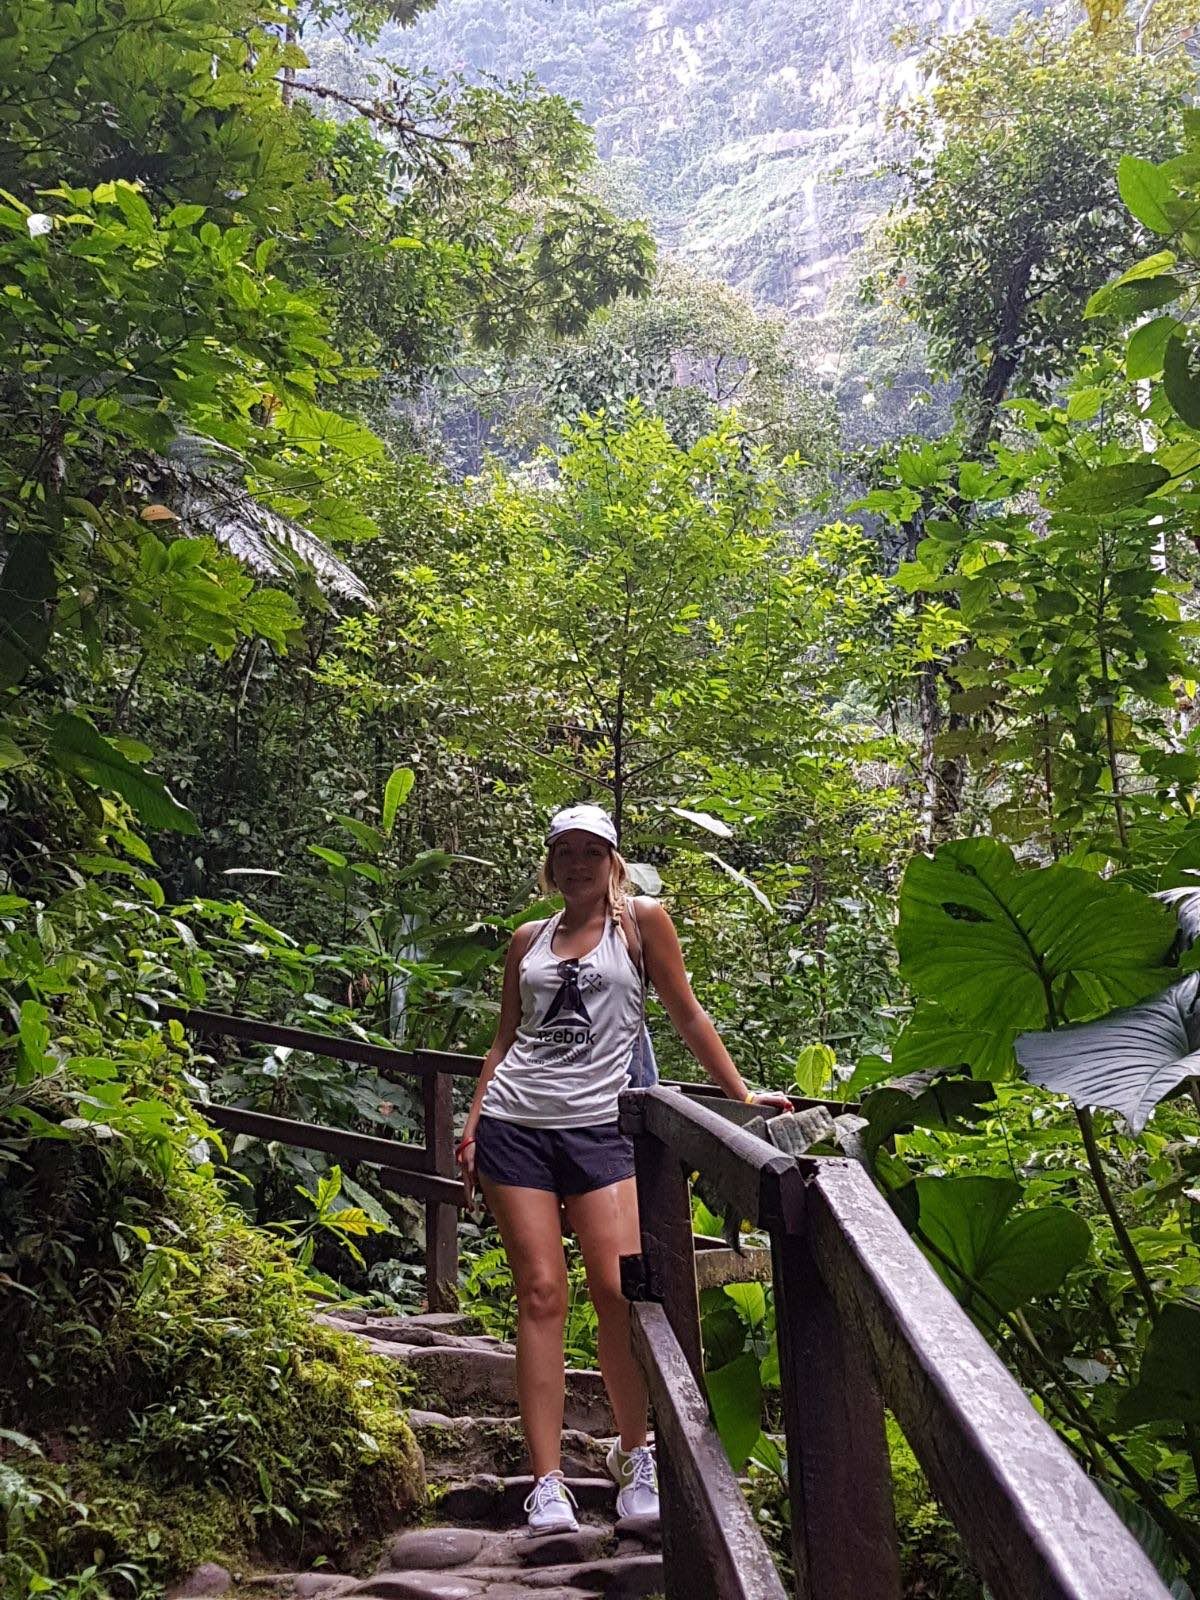 Woman walking wooden path in Amazon rainforest